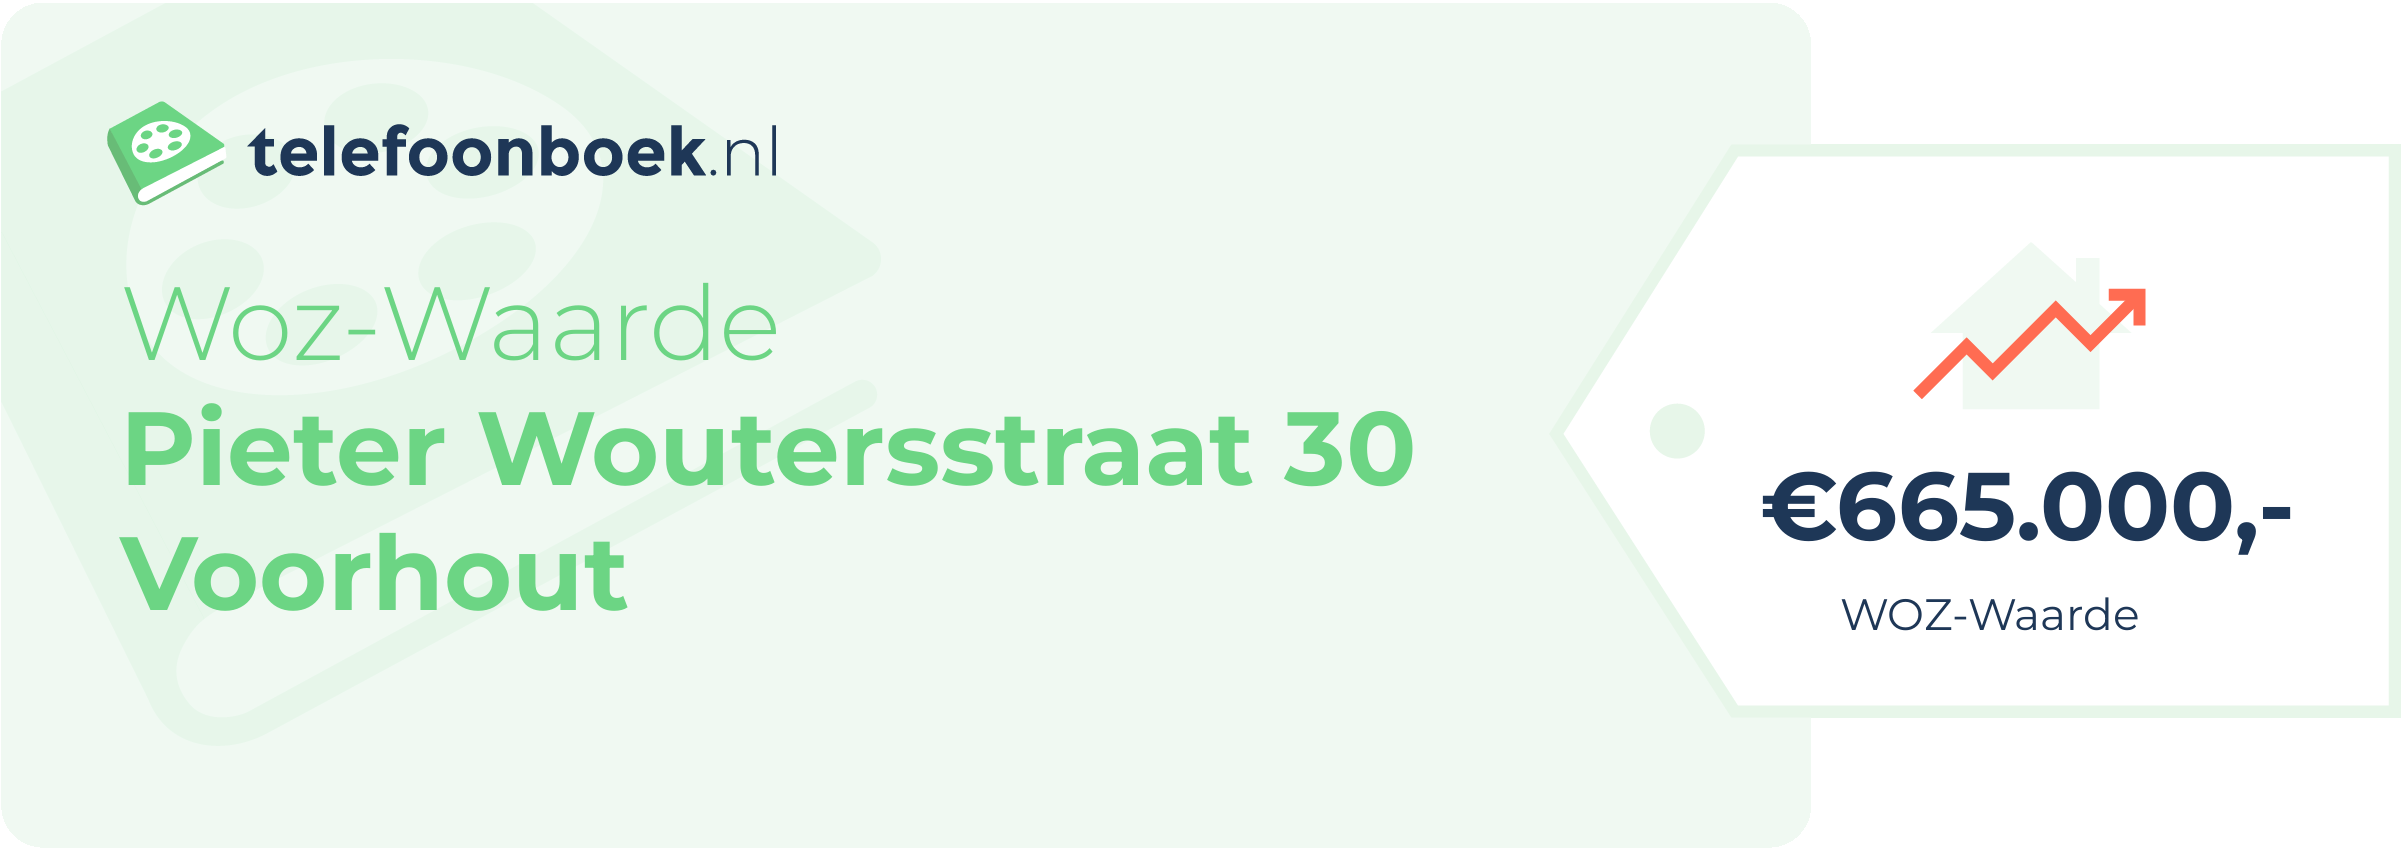 WOZ-waarde Pieter Woutersstraat 30 Voorhout